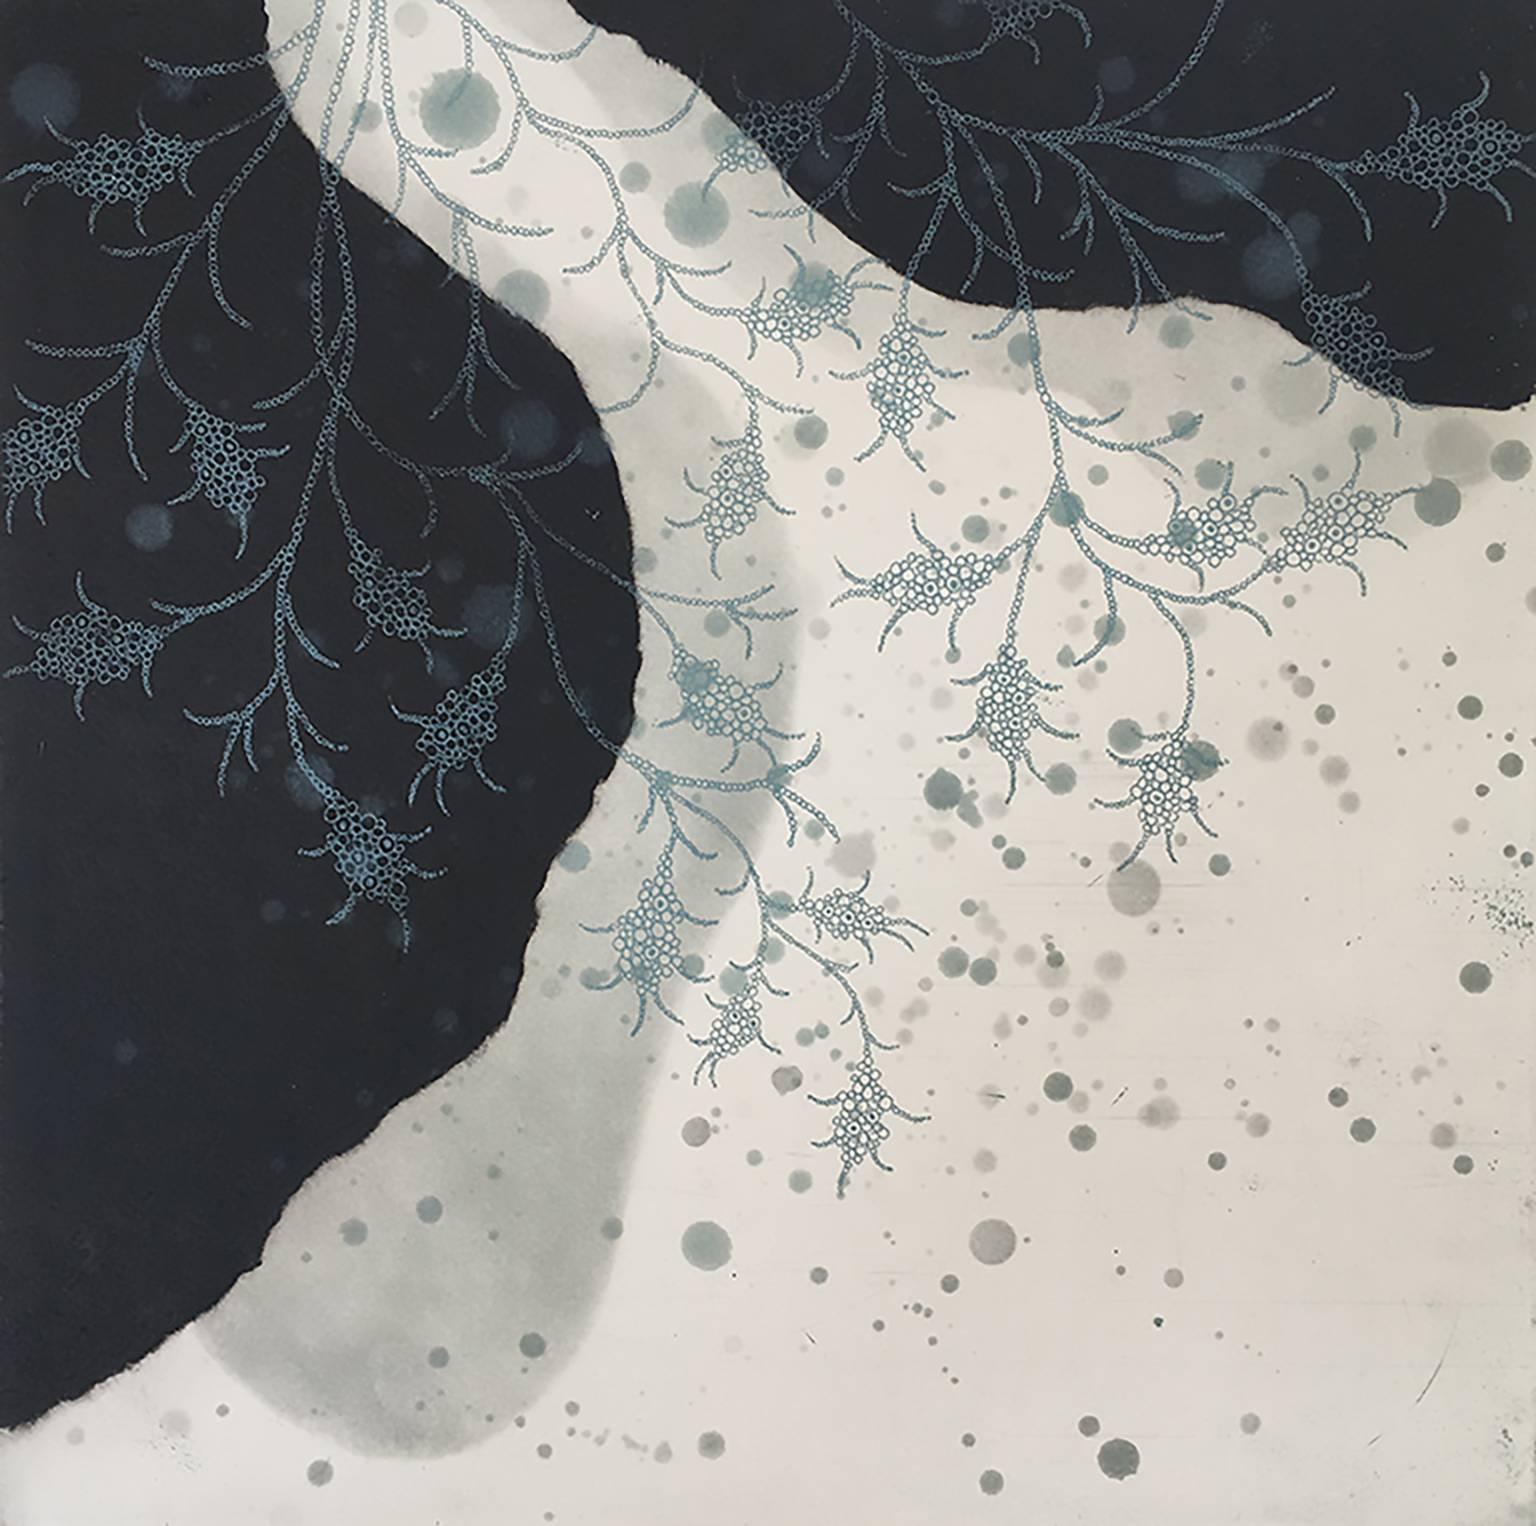 Seiko Tachibana Abstract Print - Fern-25